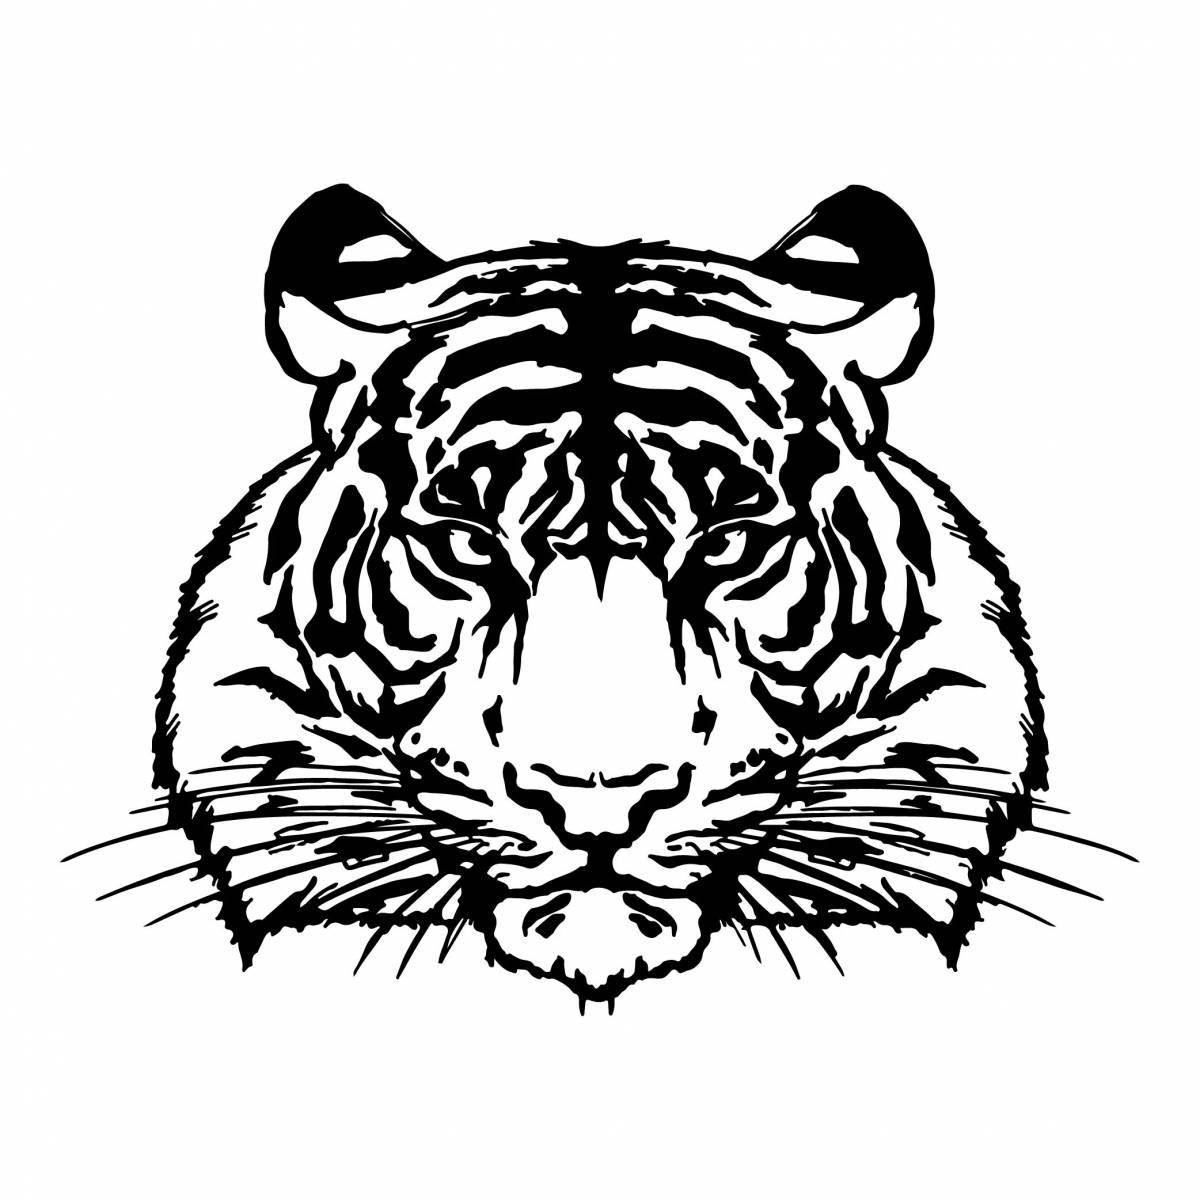 Great tiger head coloring book